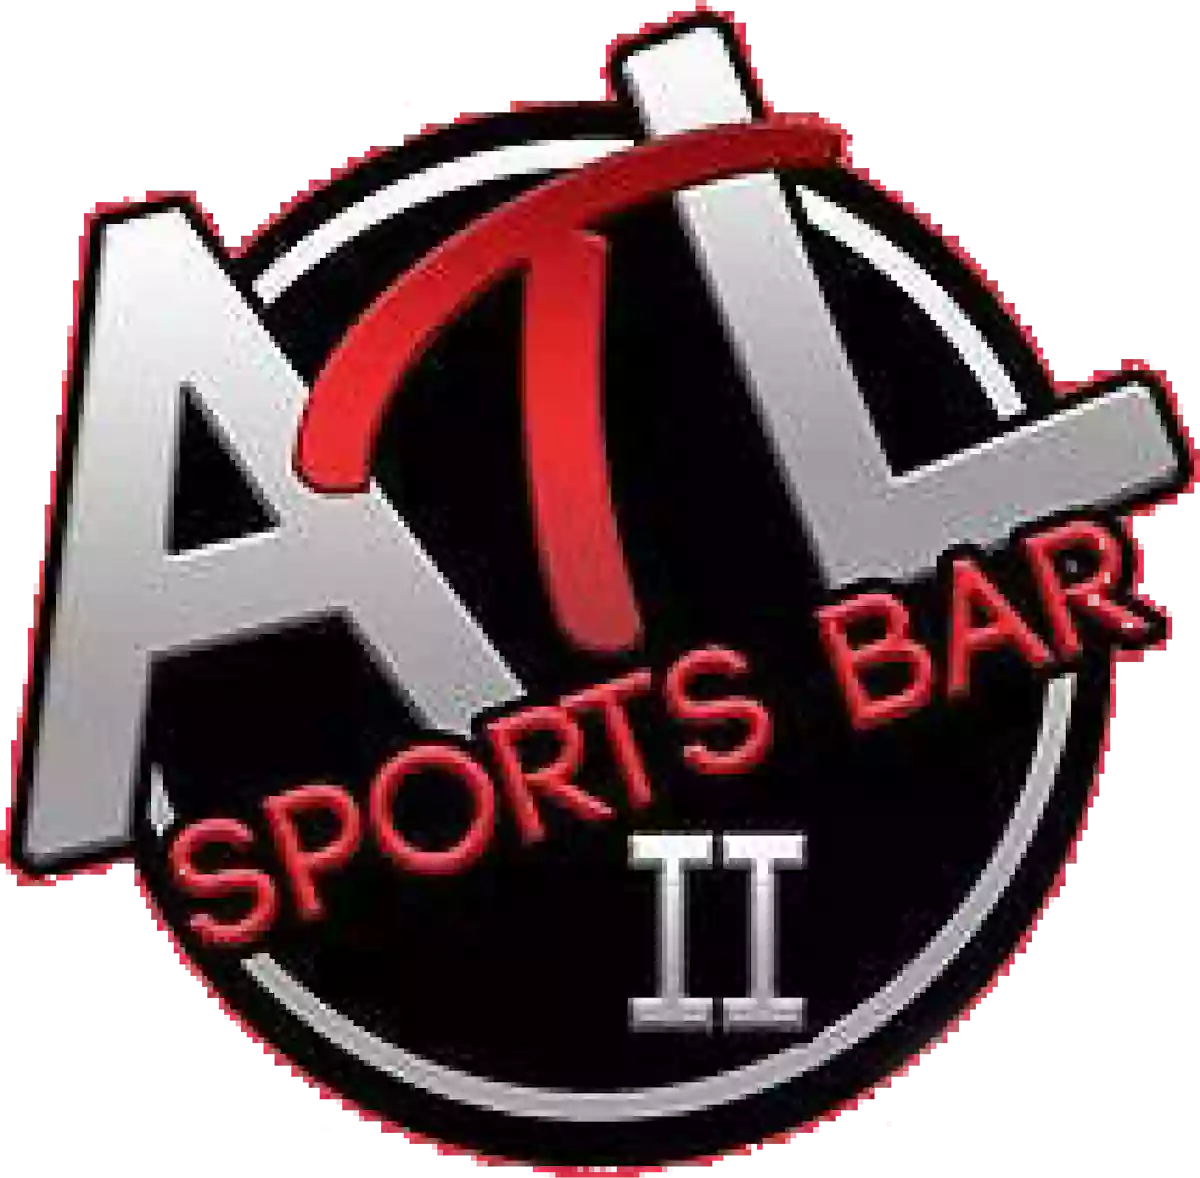 Atl Sports Bar 2